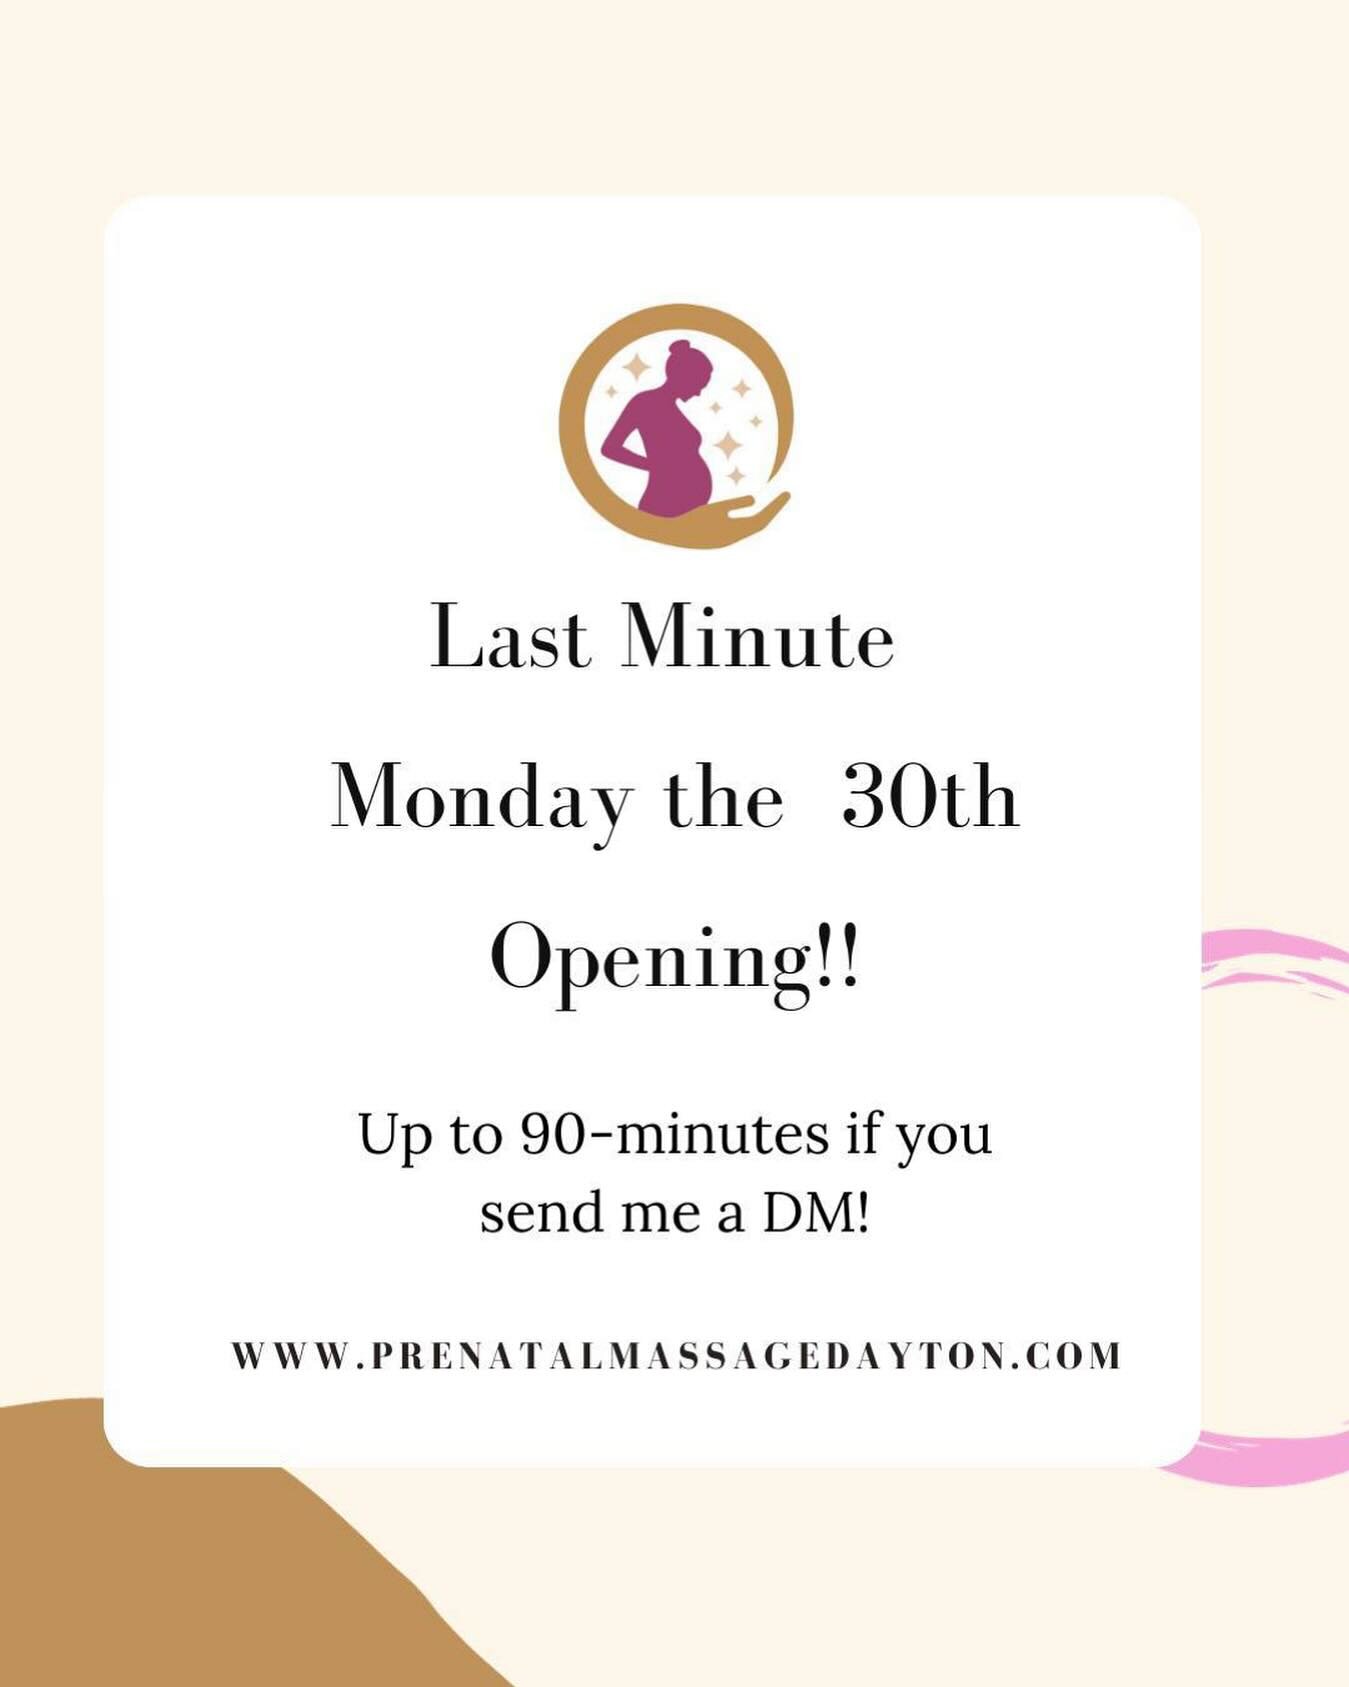 ✨Book online or DM me! ✨Monday October 30th Opening available!
#massagetherapy #Ohiomassagetherapist #daytonprenatalmassage #prenatalmassage #postpartummassage #selfcareishealthcare #loveyourself #motherhoodjourney #momsneedabreaktoo